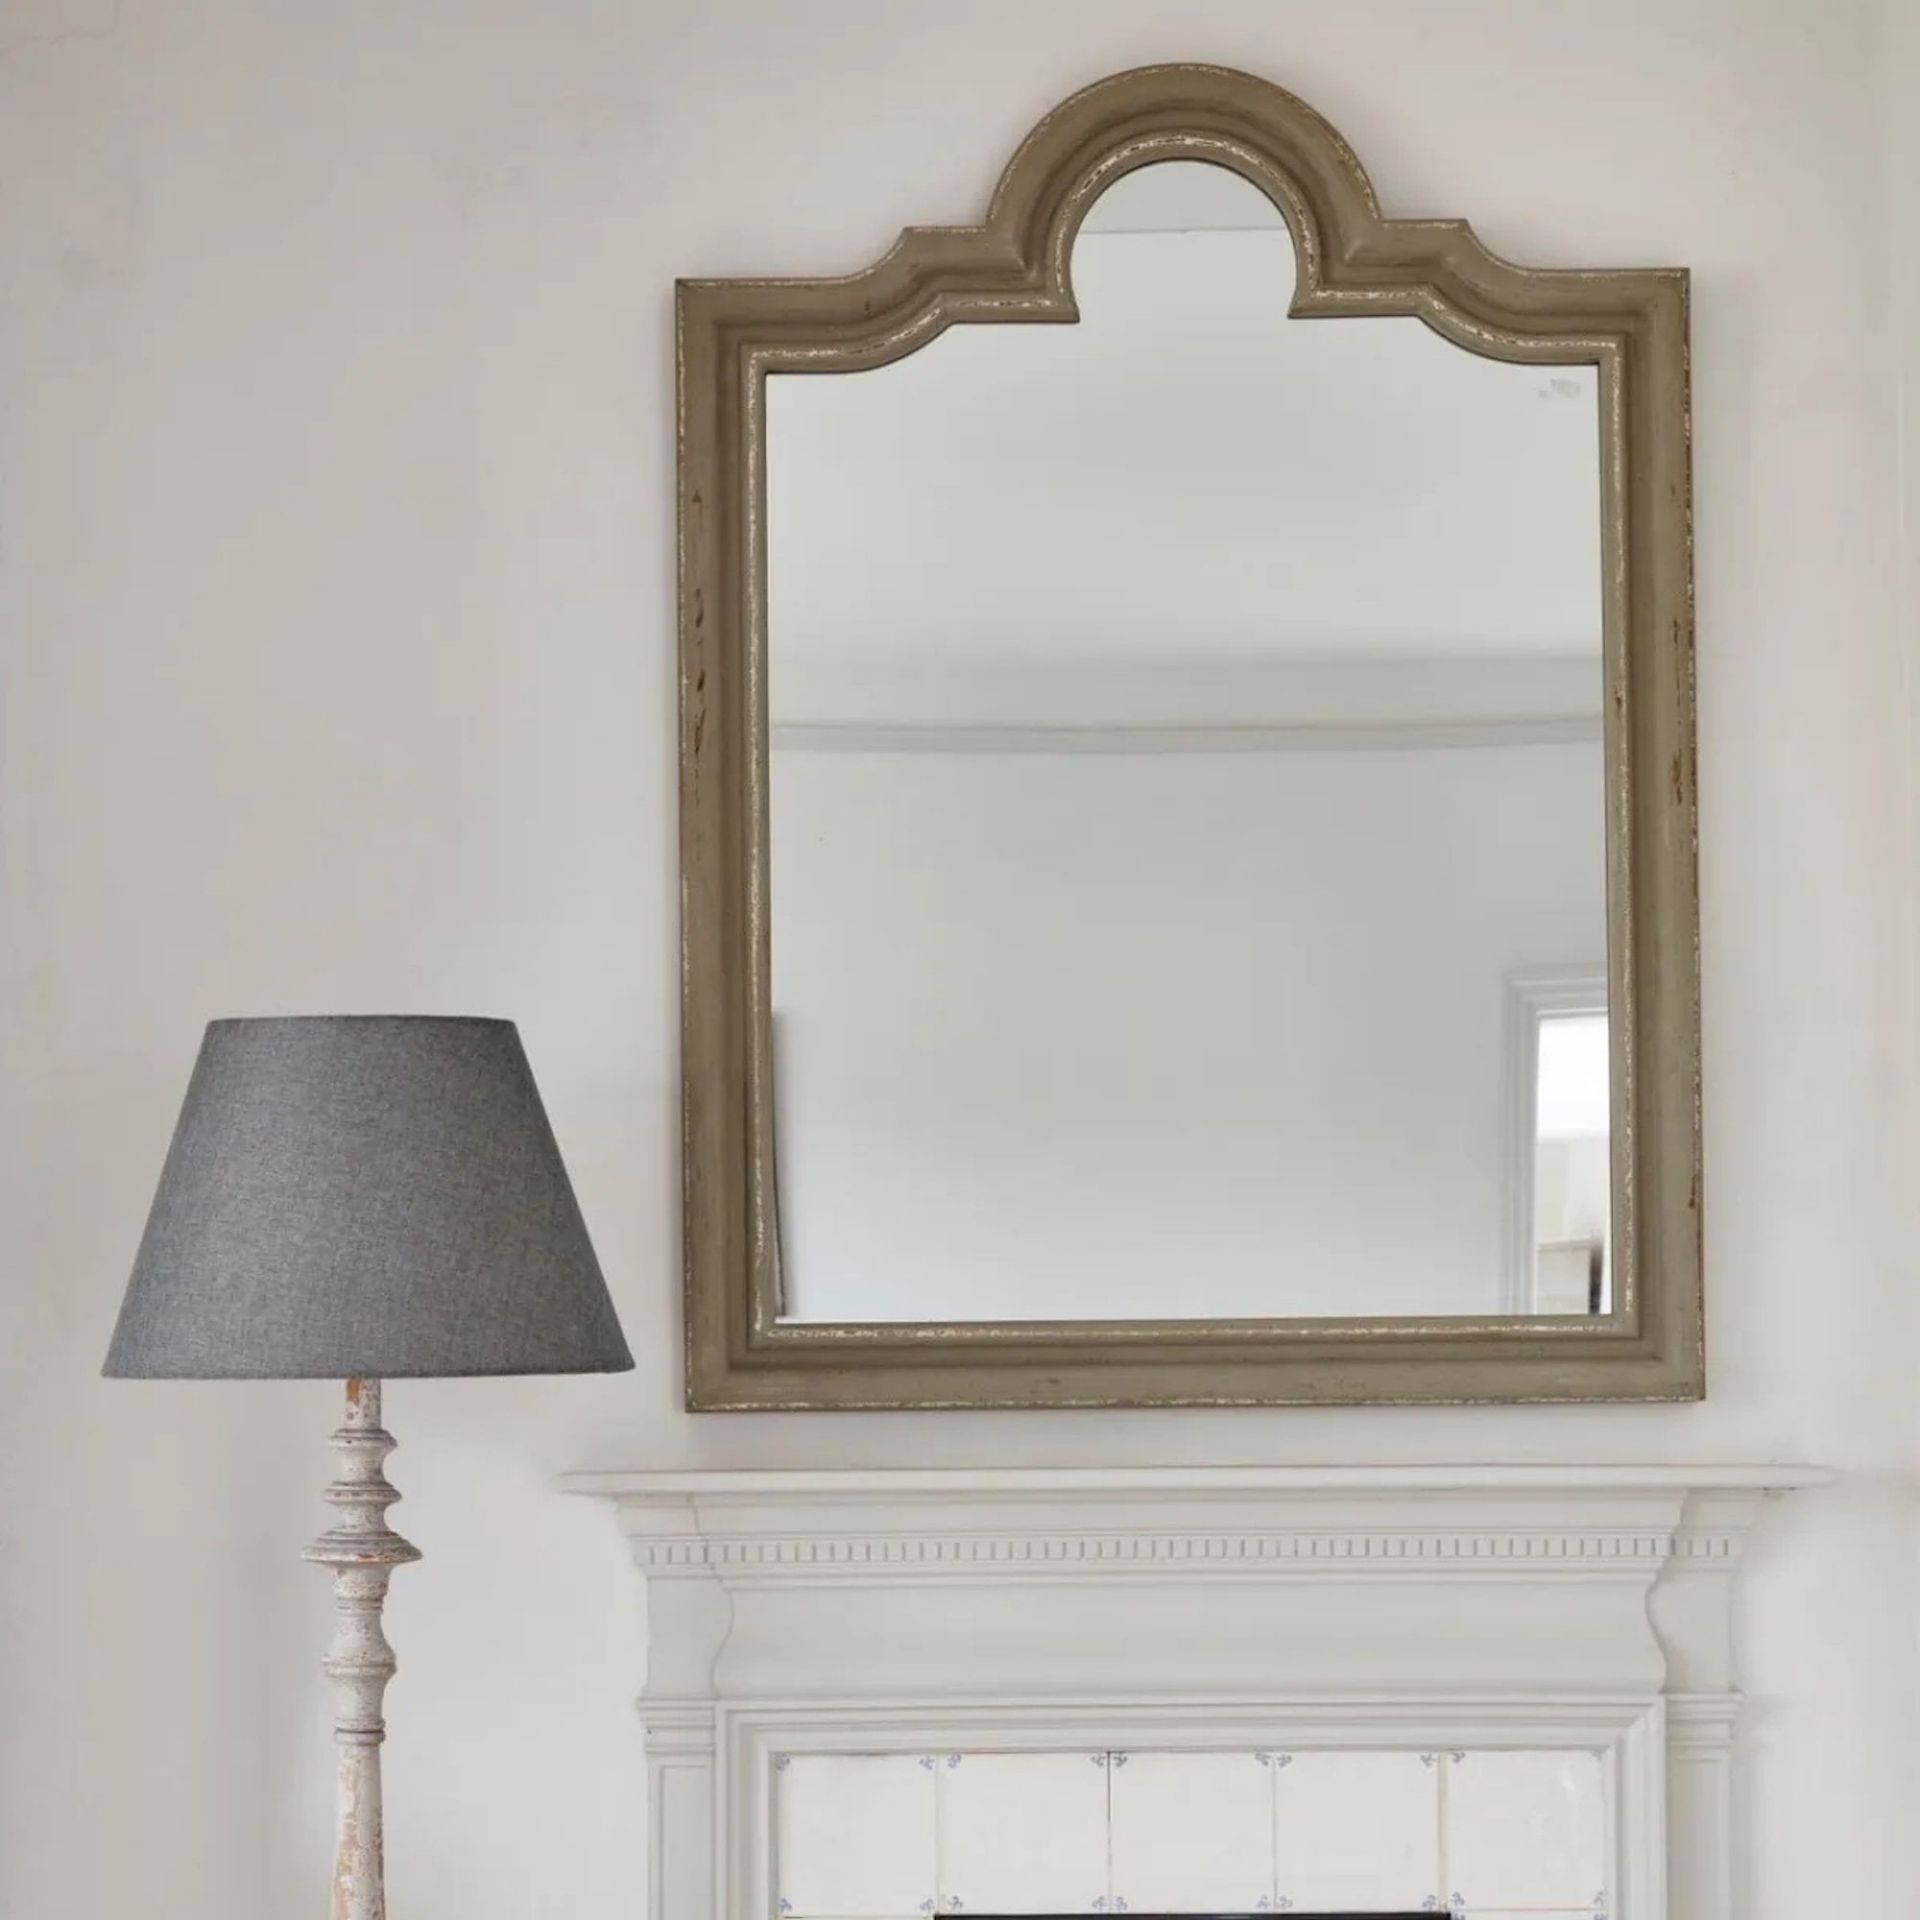 Cox & Cox Wilton Grey Portrait Mantle Mirror. RRP £450.00. - SR3. The Wilton Grey Portrait Mantle